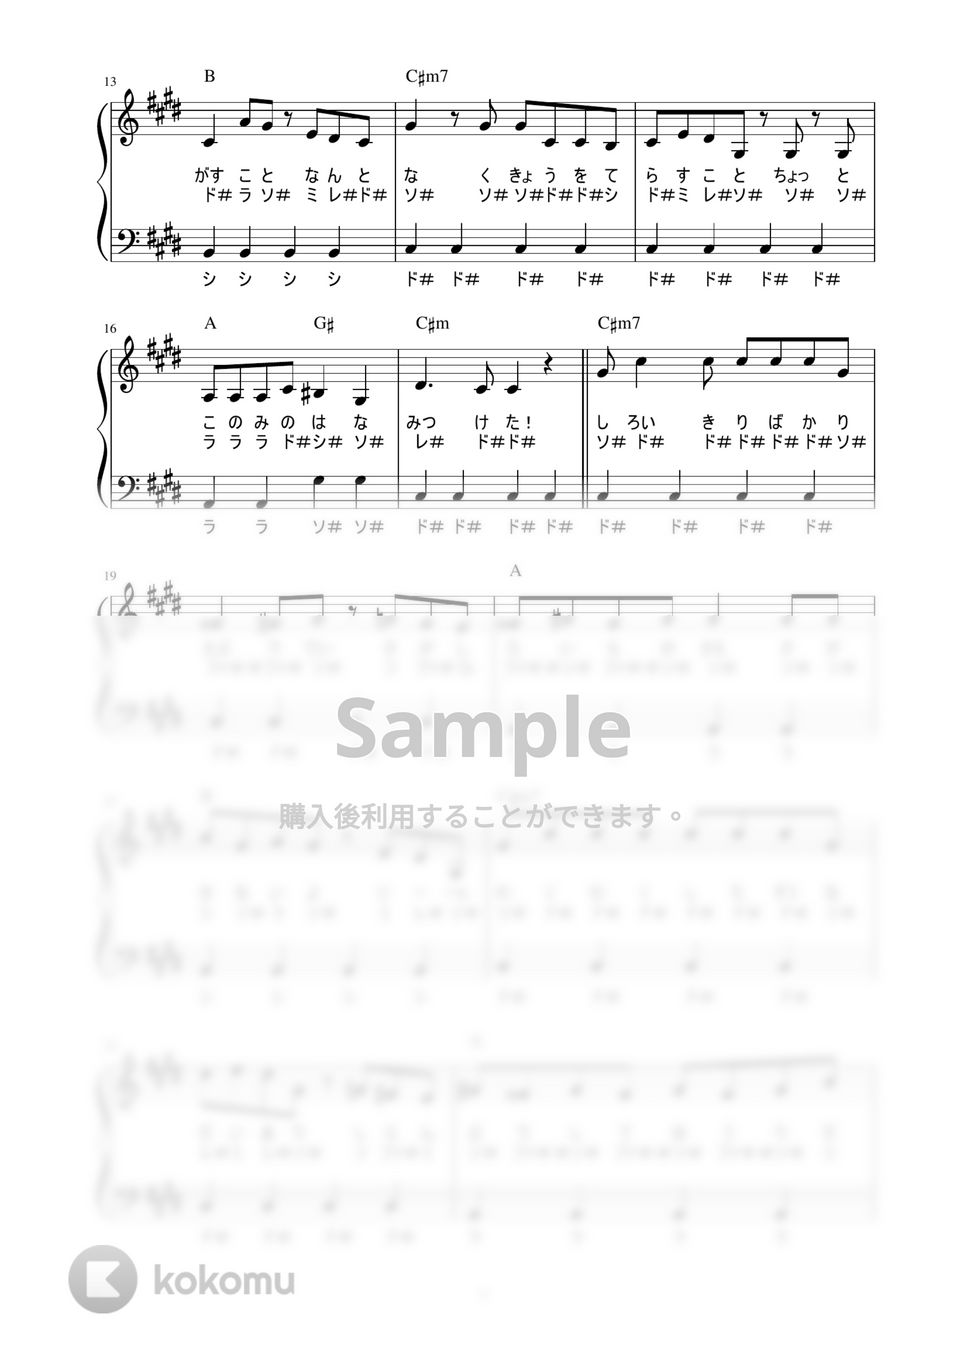 asami feat.Chinozo - ドキメキダイアリー (かんたん / 歌詞付き / ドレミ付き / 初心者) by piano.tokyo